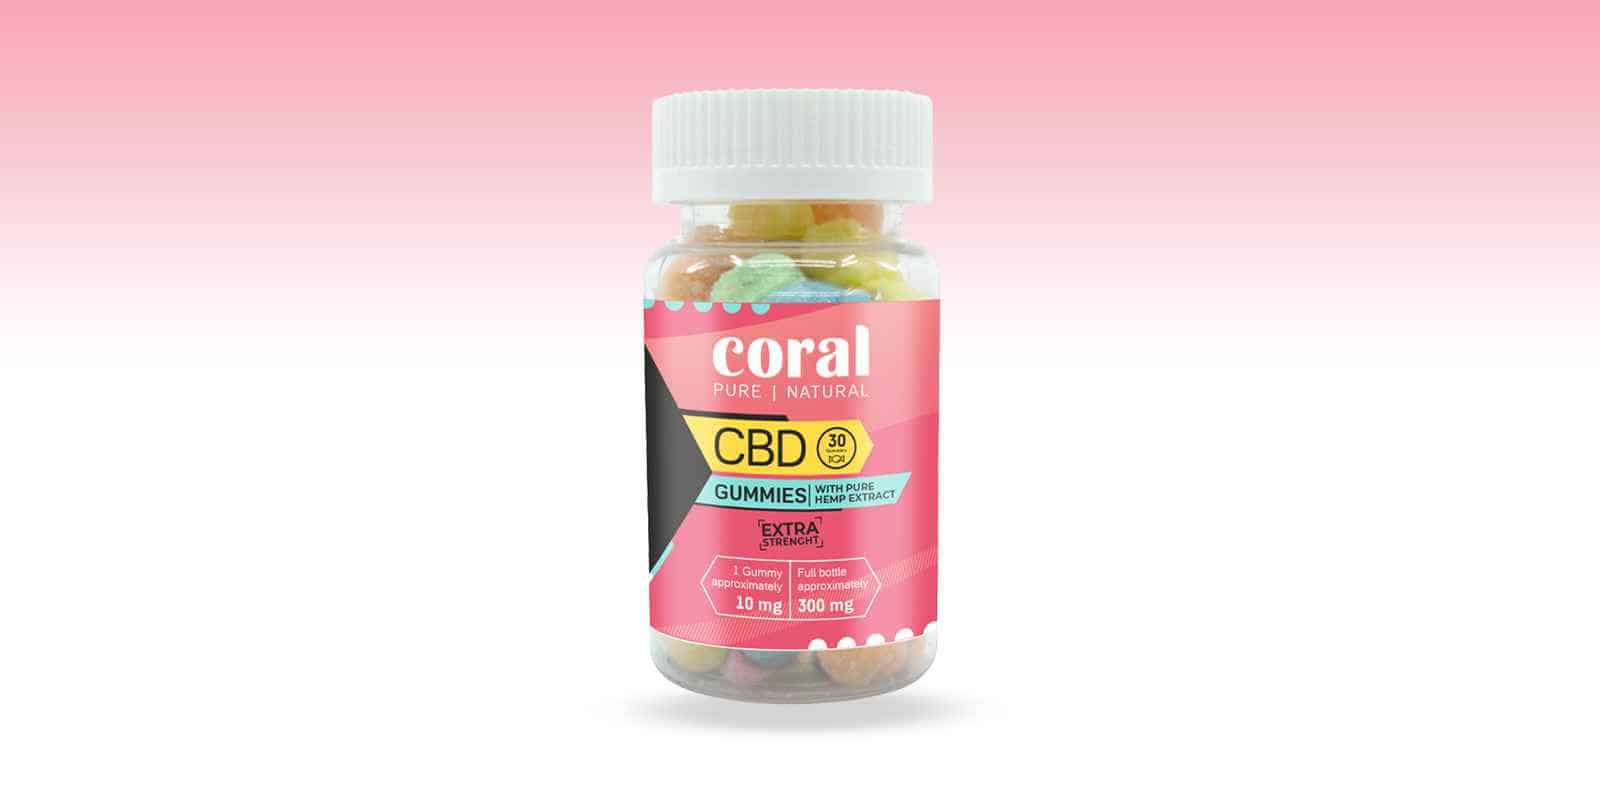 Coral CBD Gummies Reviews